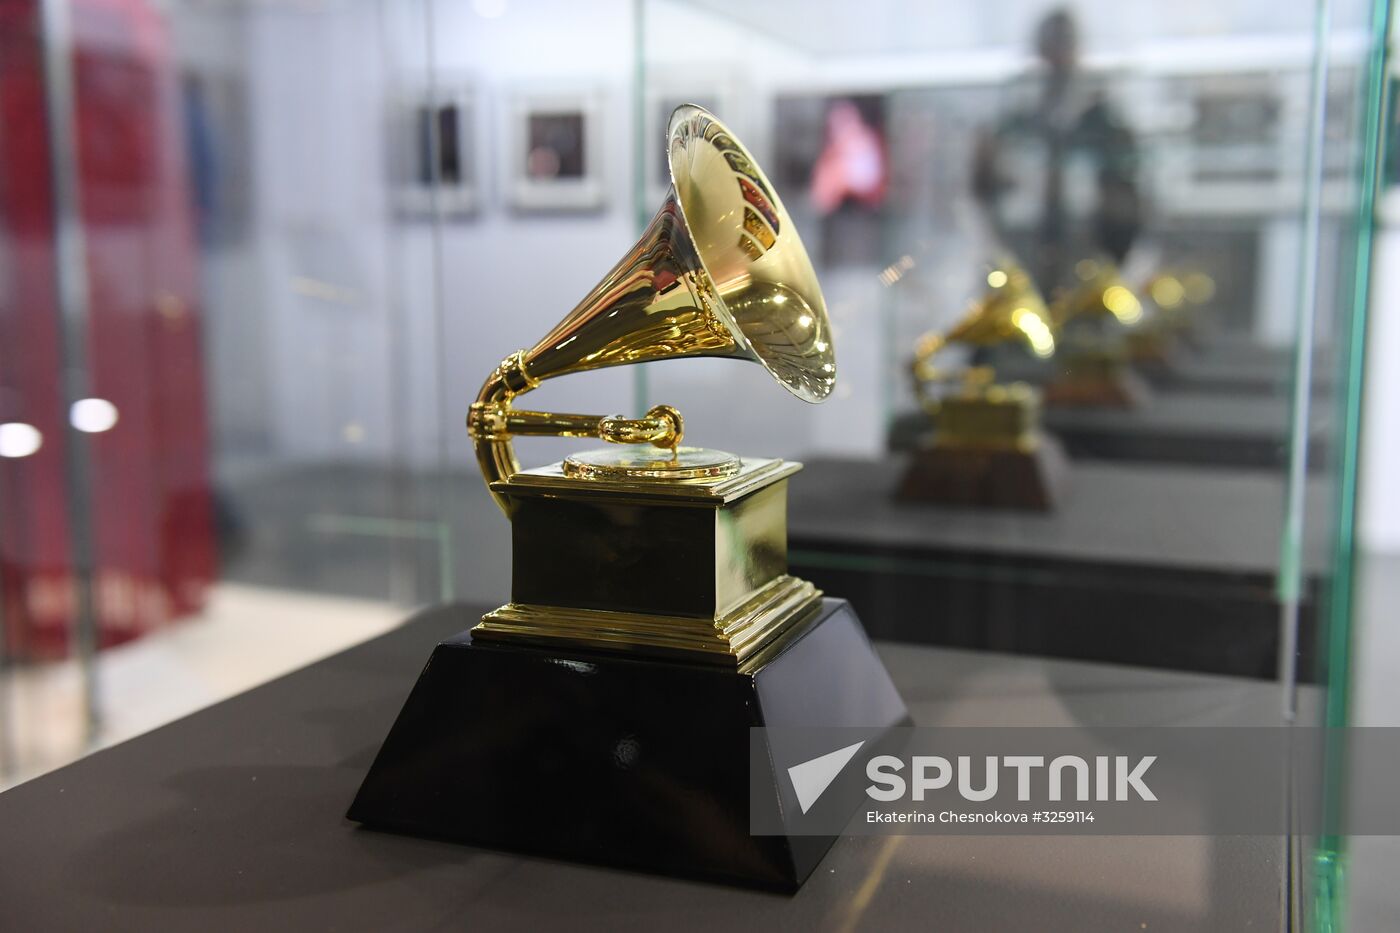 Grammy Museum exposition in Smolensky Passage